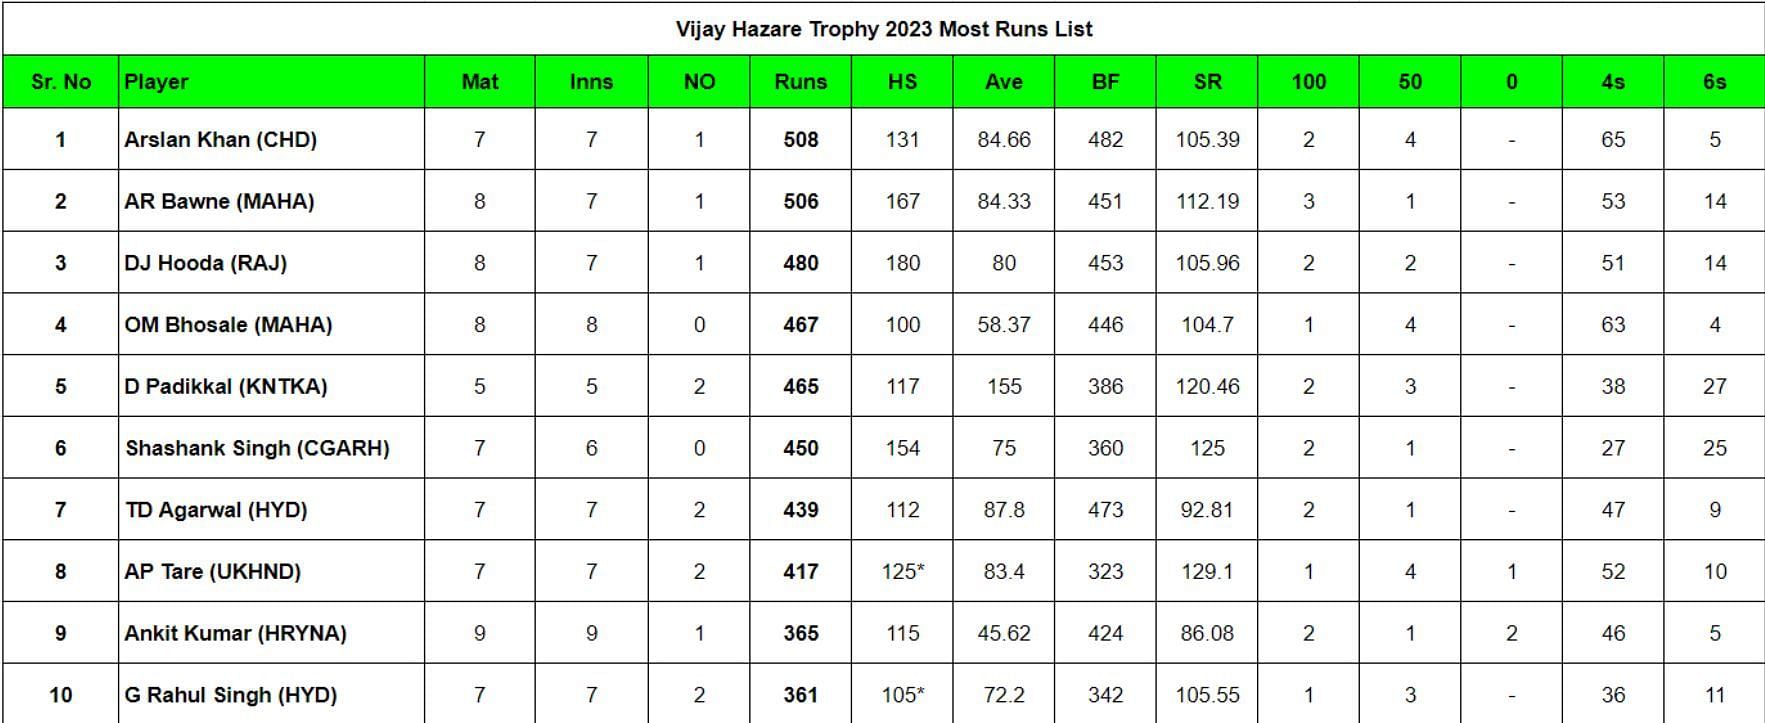 Vijay Hazare Trophy 2023 Most Runs List